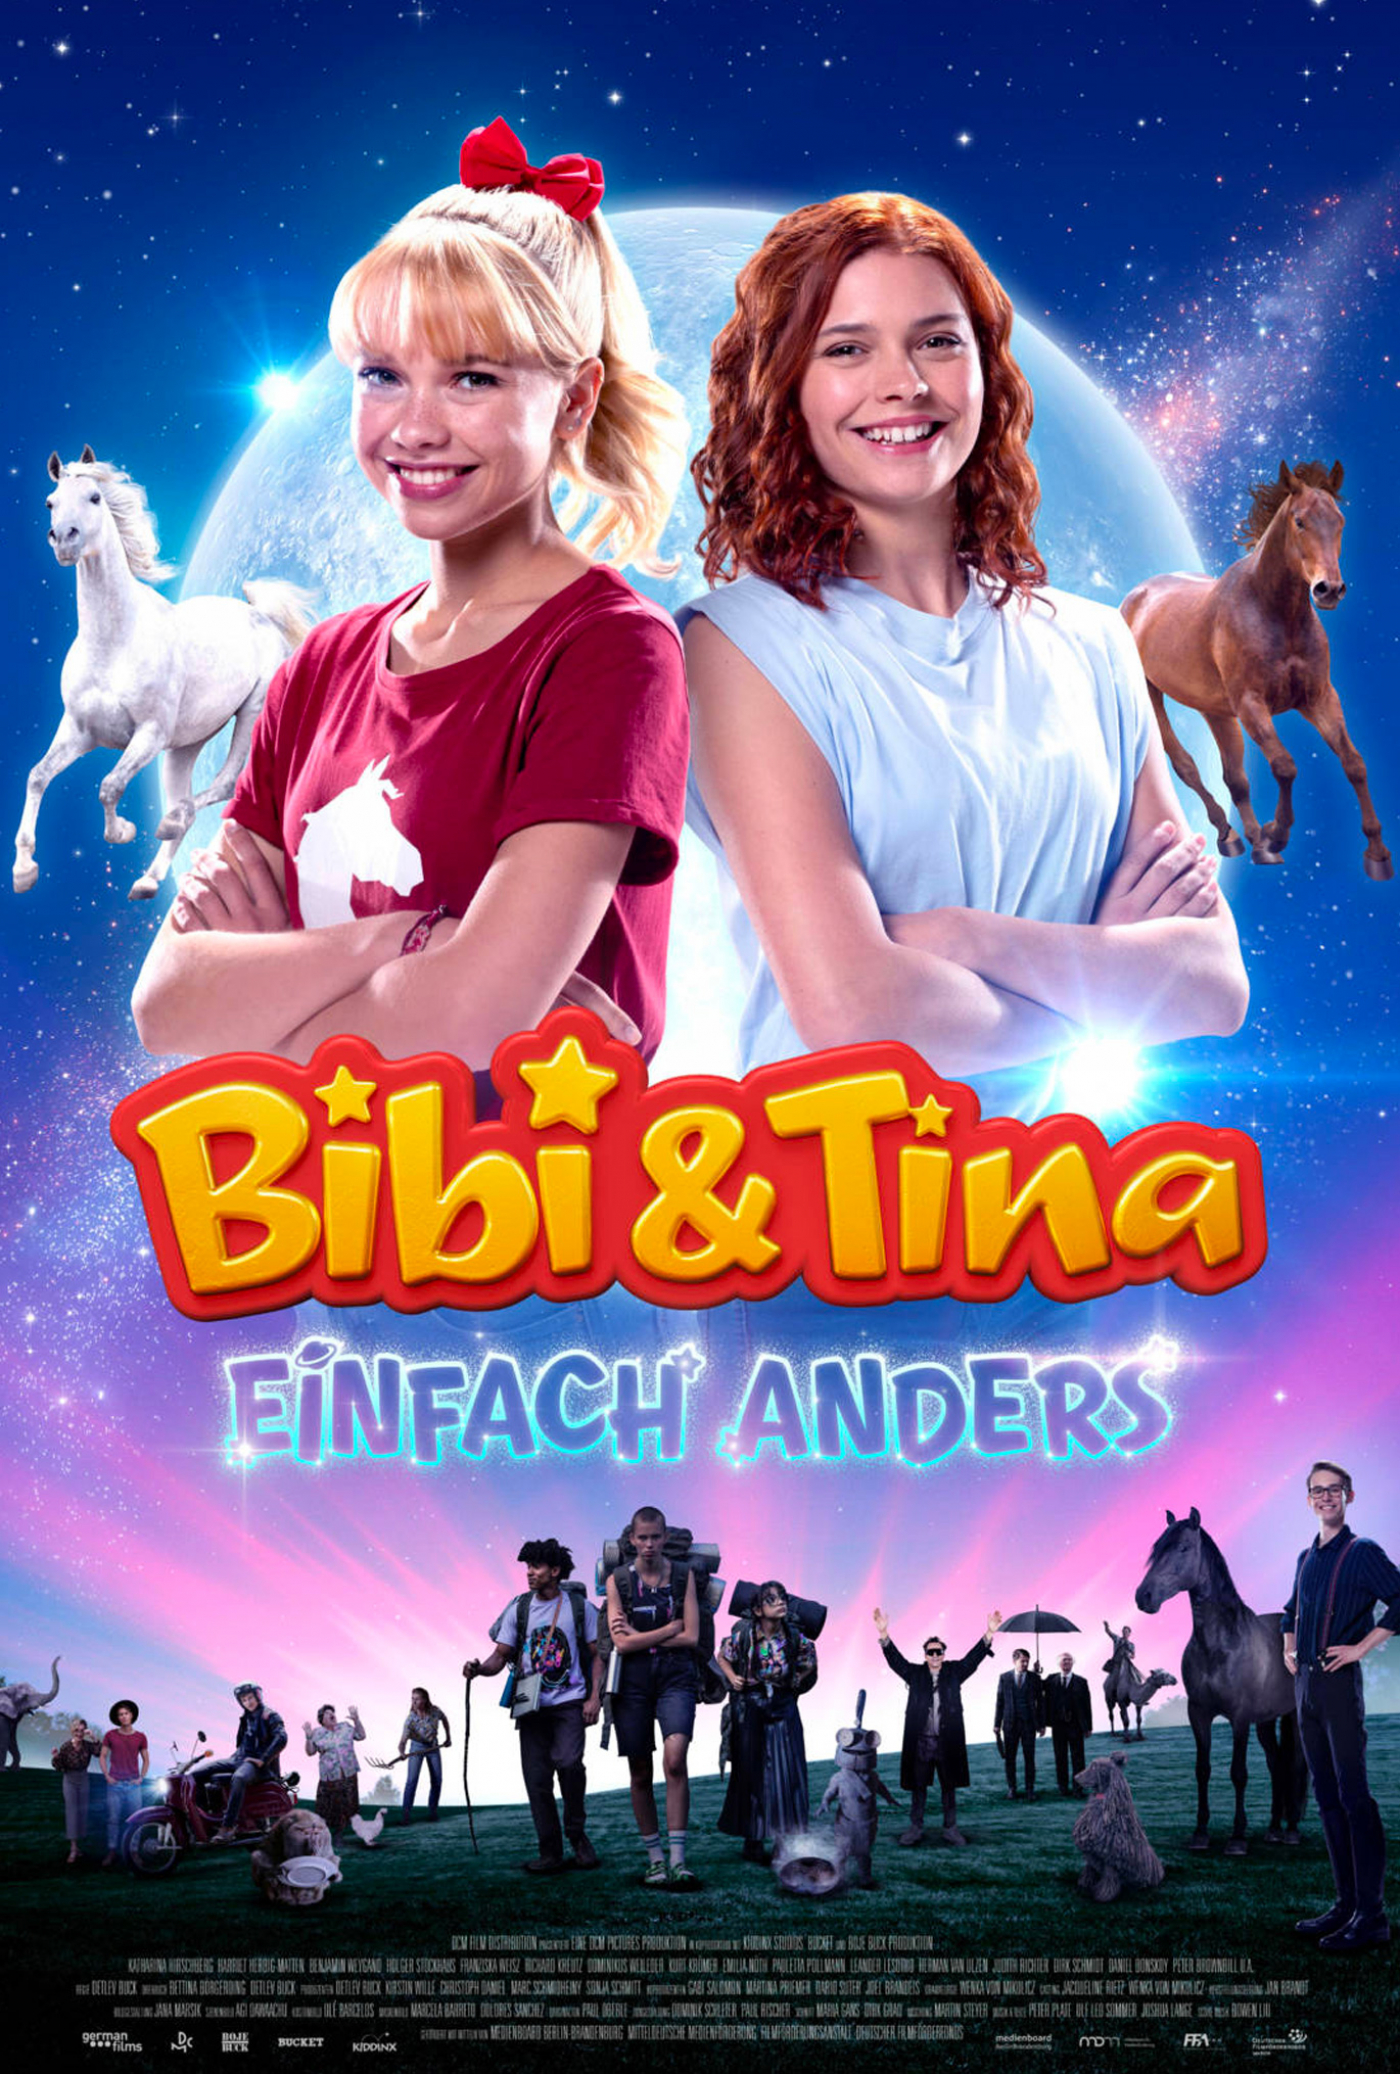 BIBI & TINA – EINFACH ANDERS